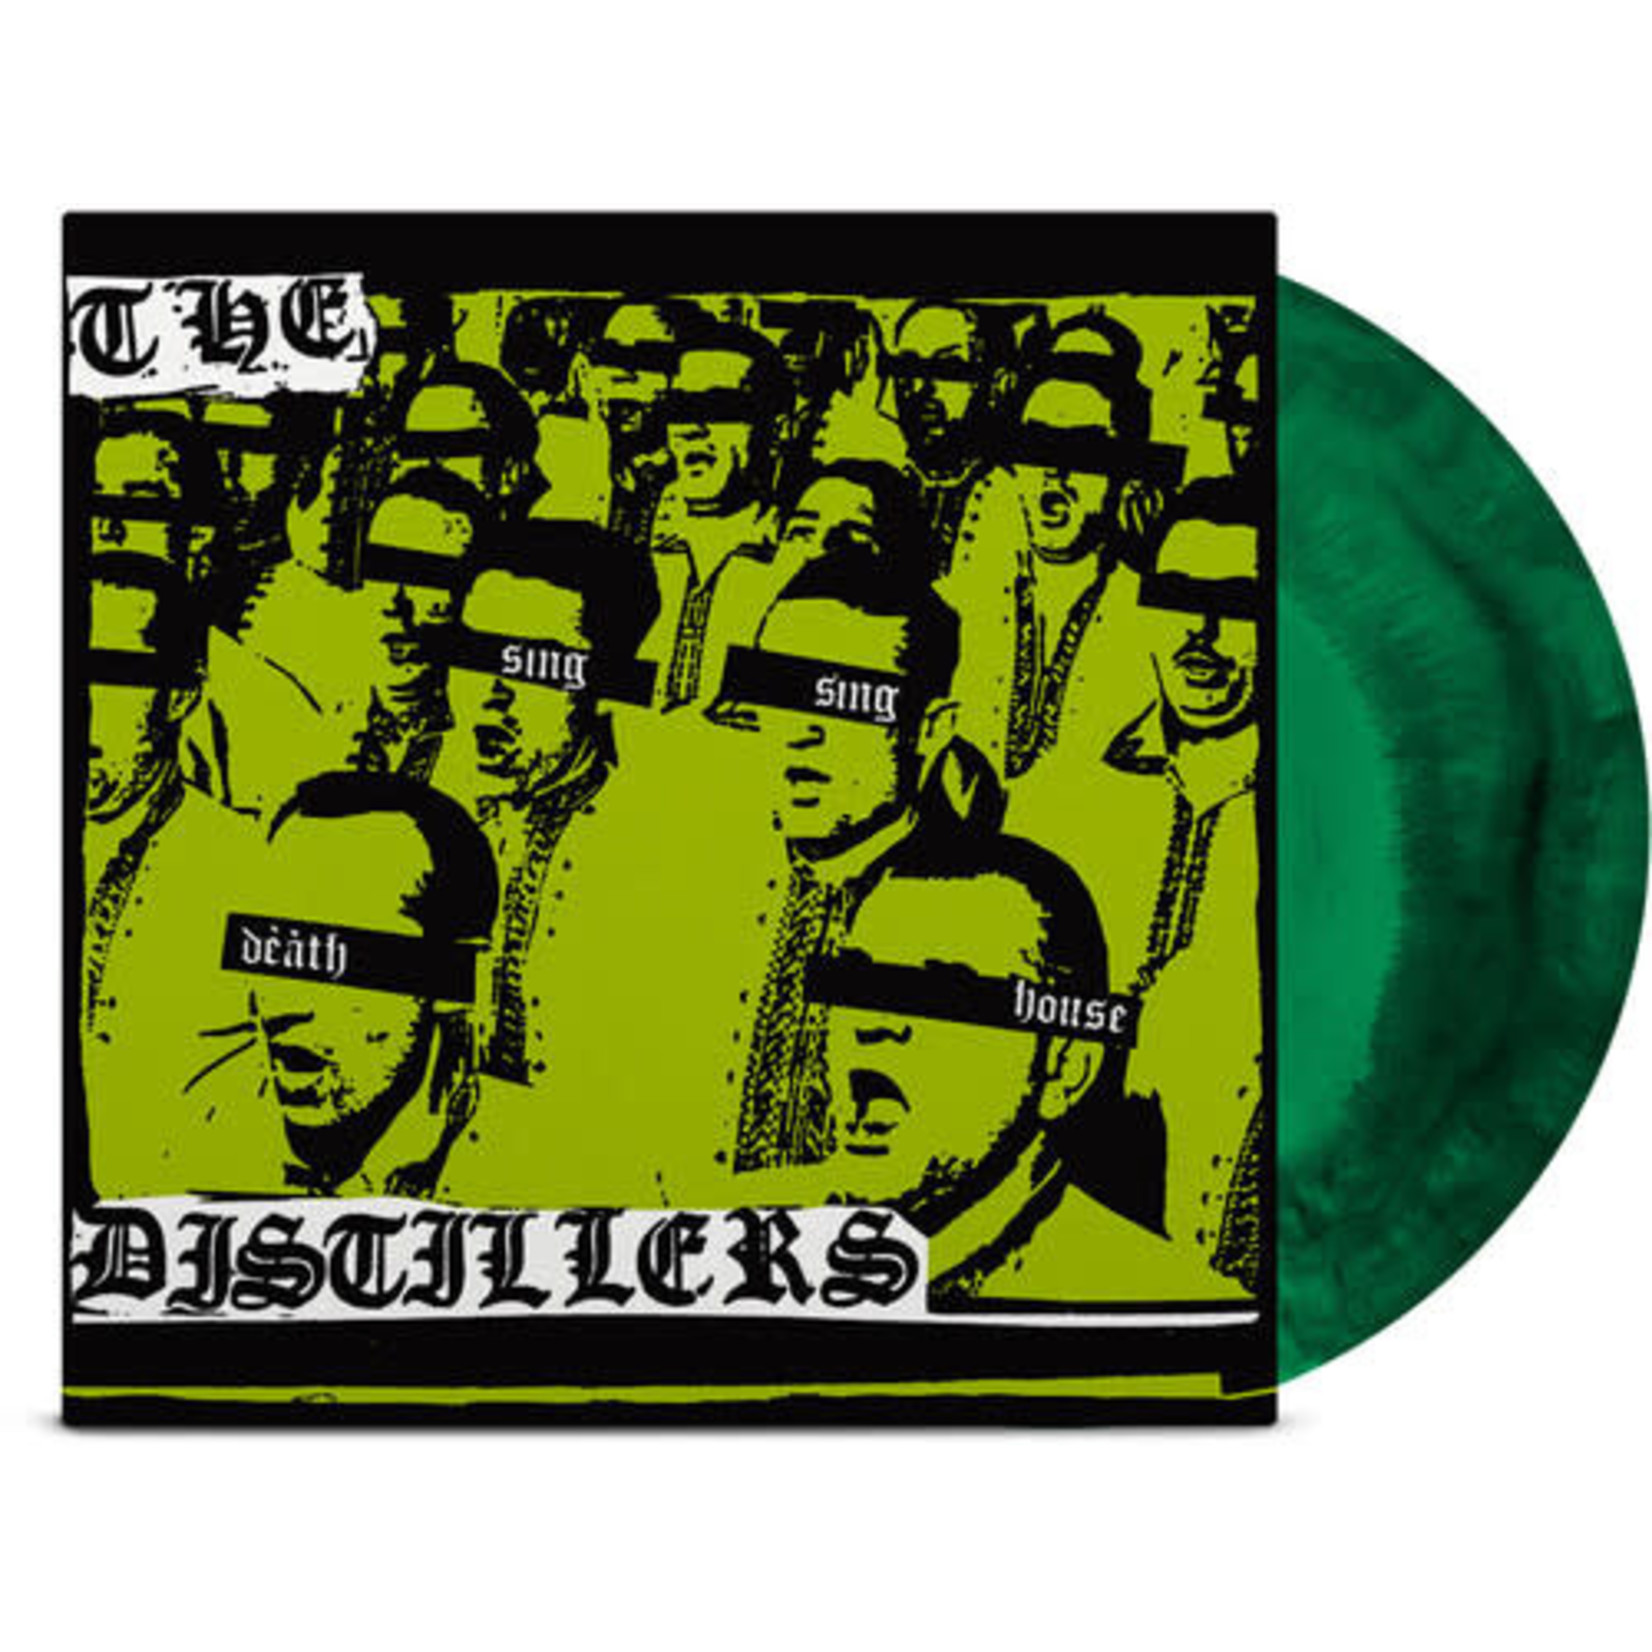 [New] Distillers - Sing Sing Death House (Anniversary Edition, green vinyl)